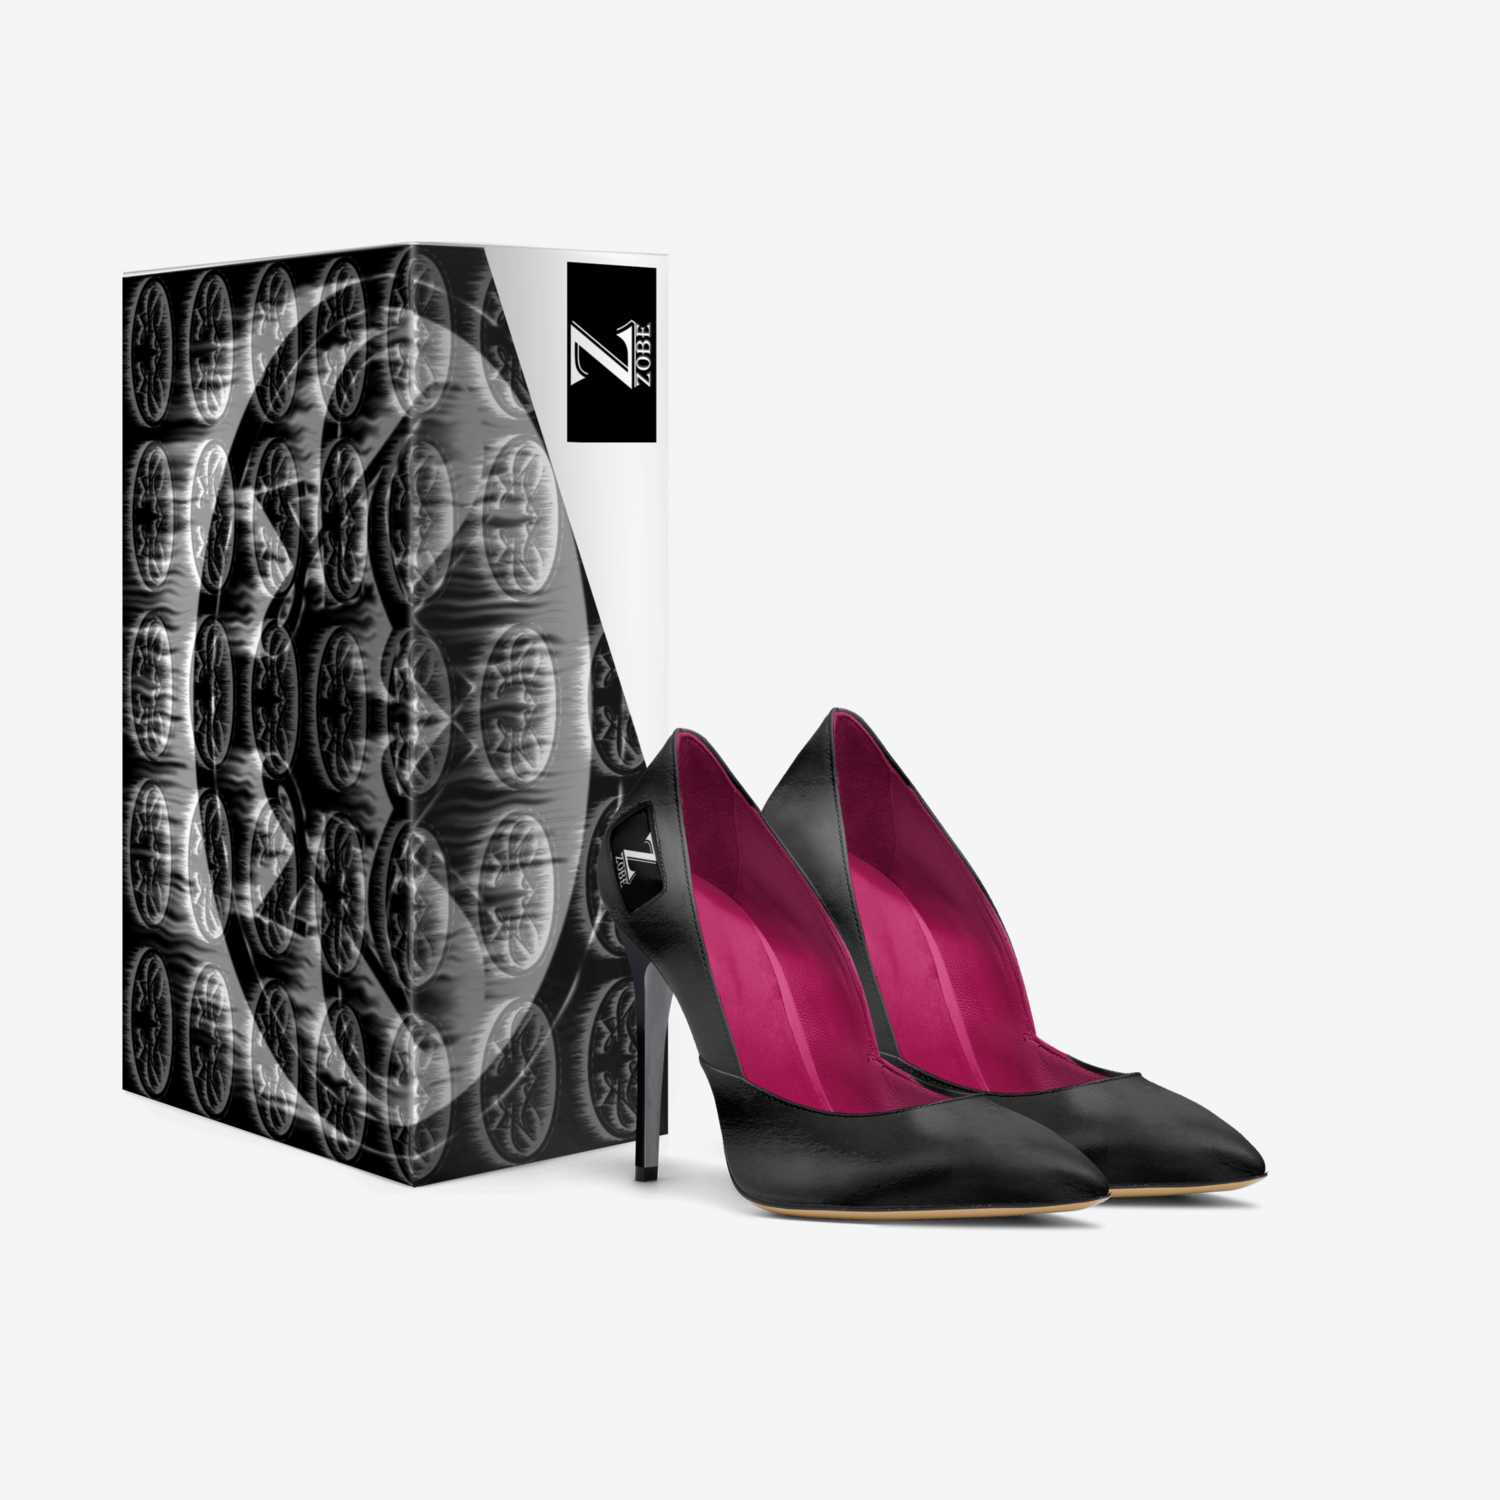 Zobe Stilettos custom made in Italy shoes by Alonzo Black | Box view